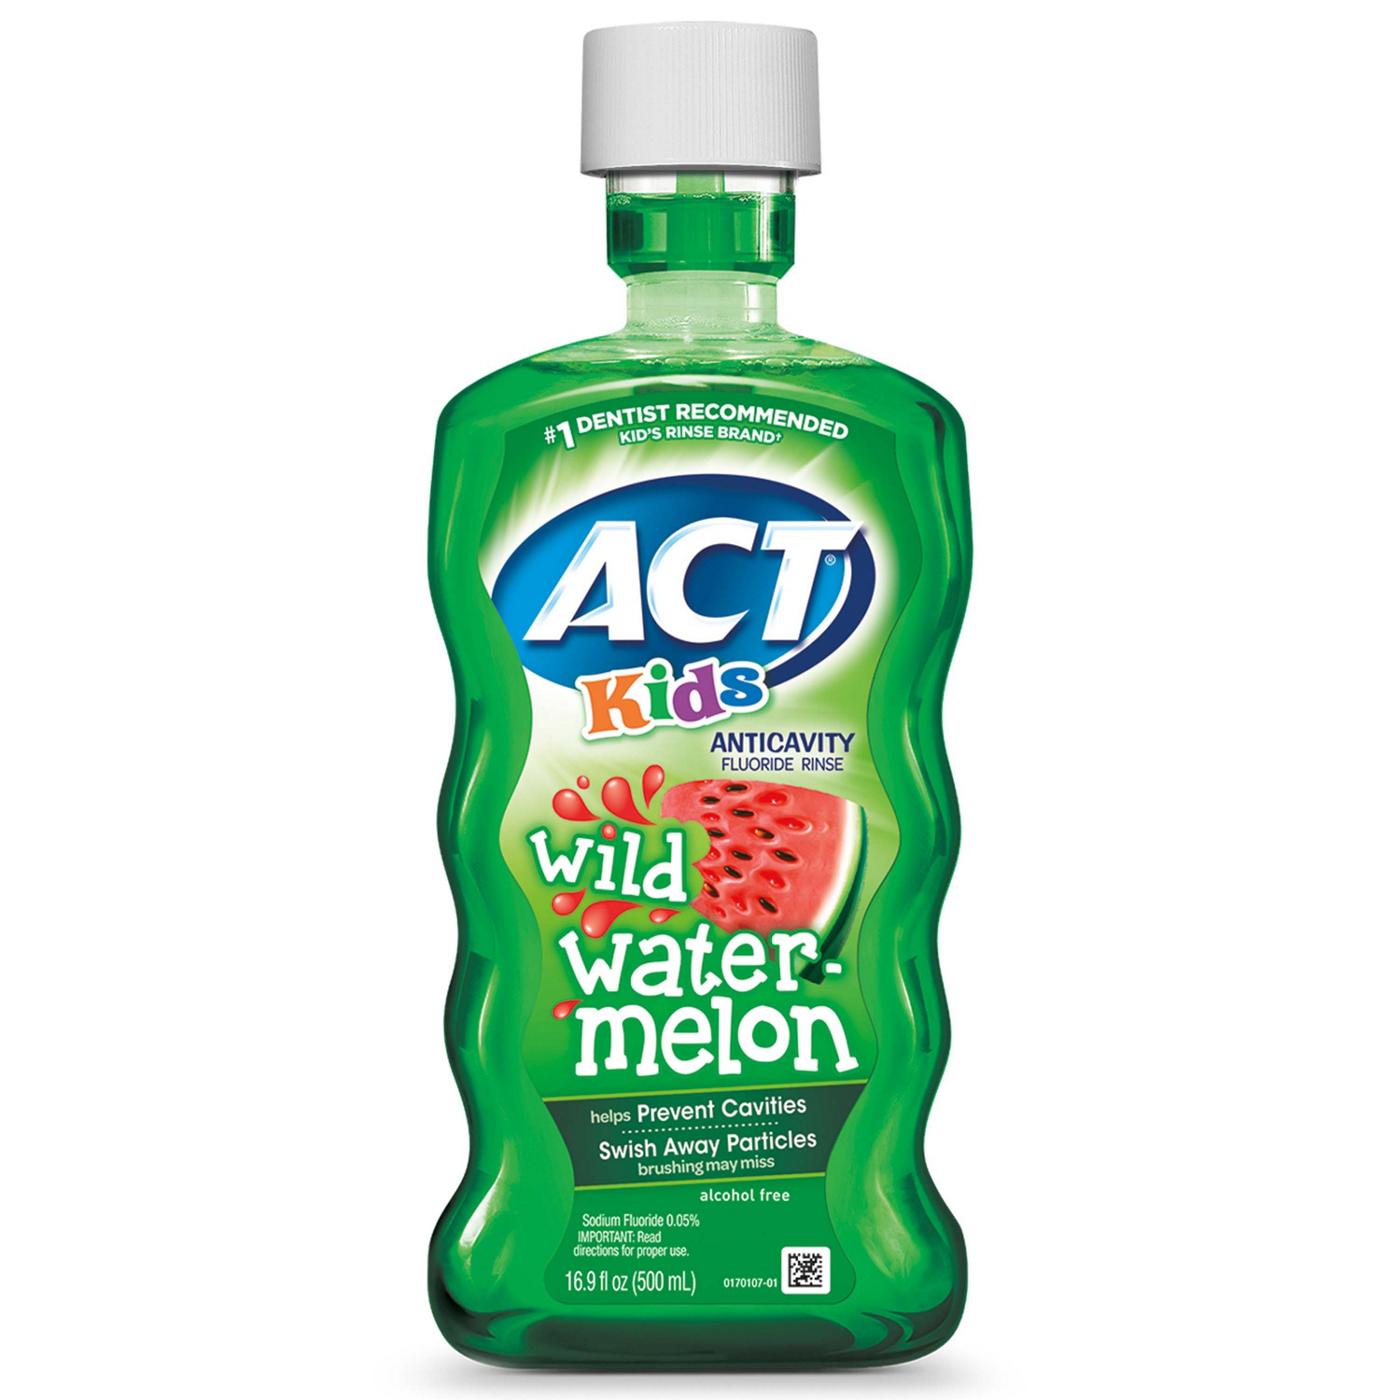 ACT Kids Anticavity Fluoride Rinse - Wild Watermelon; image 1 of 6